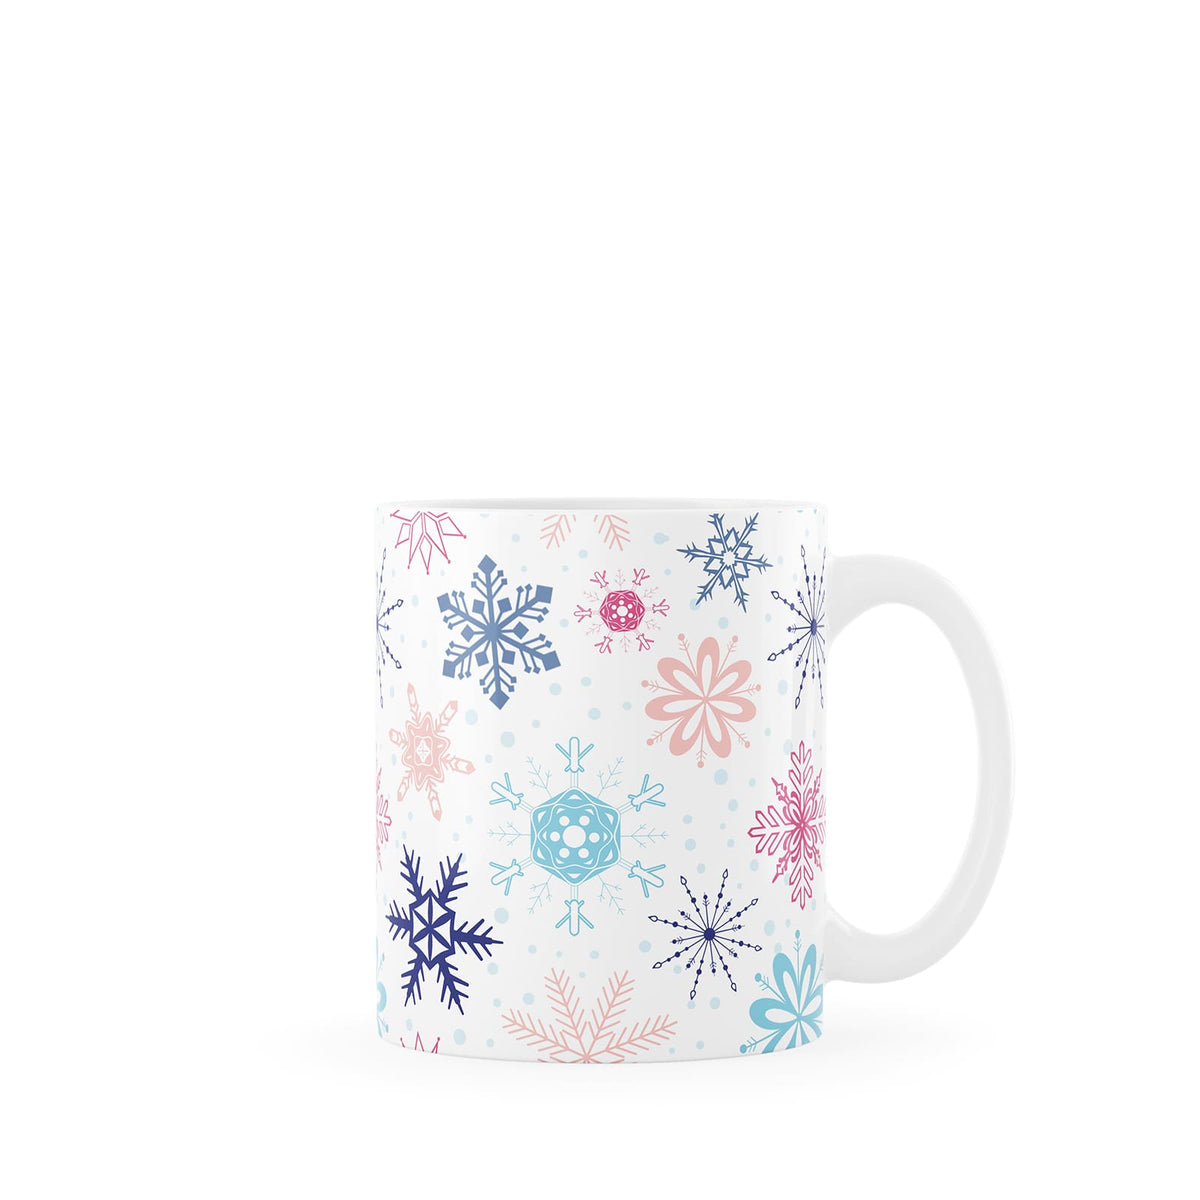 White Snowflake Mug